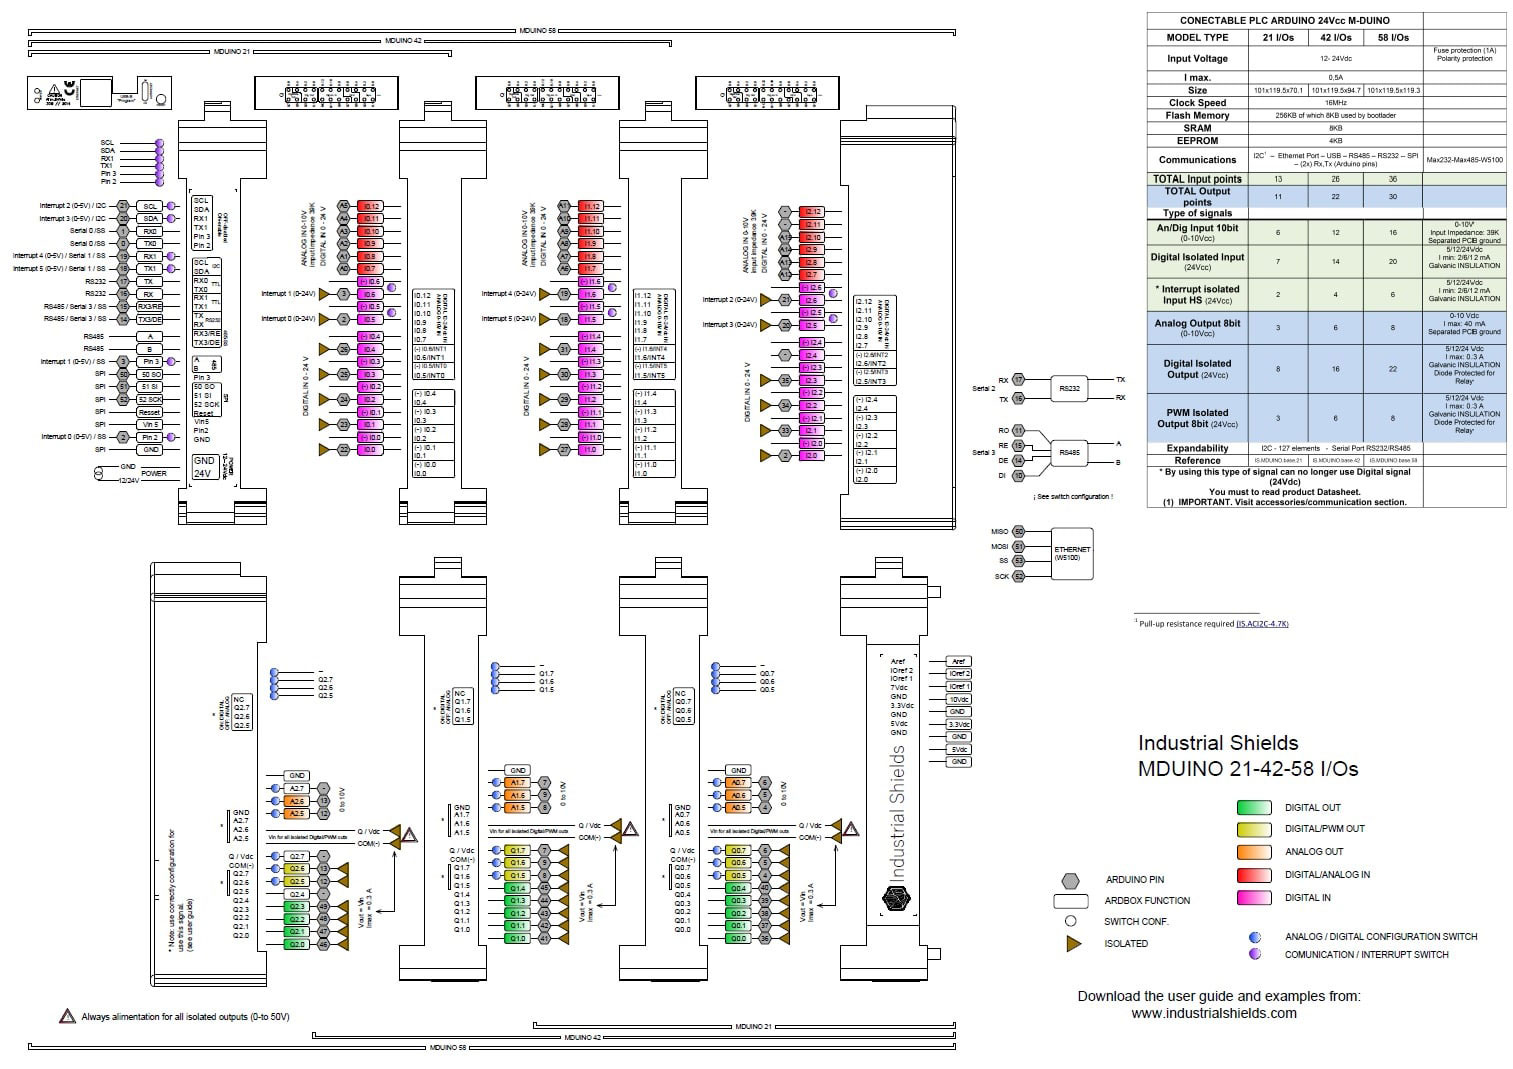 M-DUINO PLC 21 I/Os Analog/Digital PLUS Industrial Arduino Module- Click to Enlarge